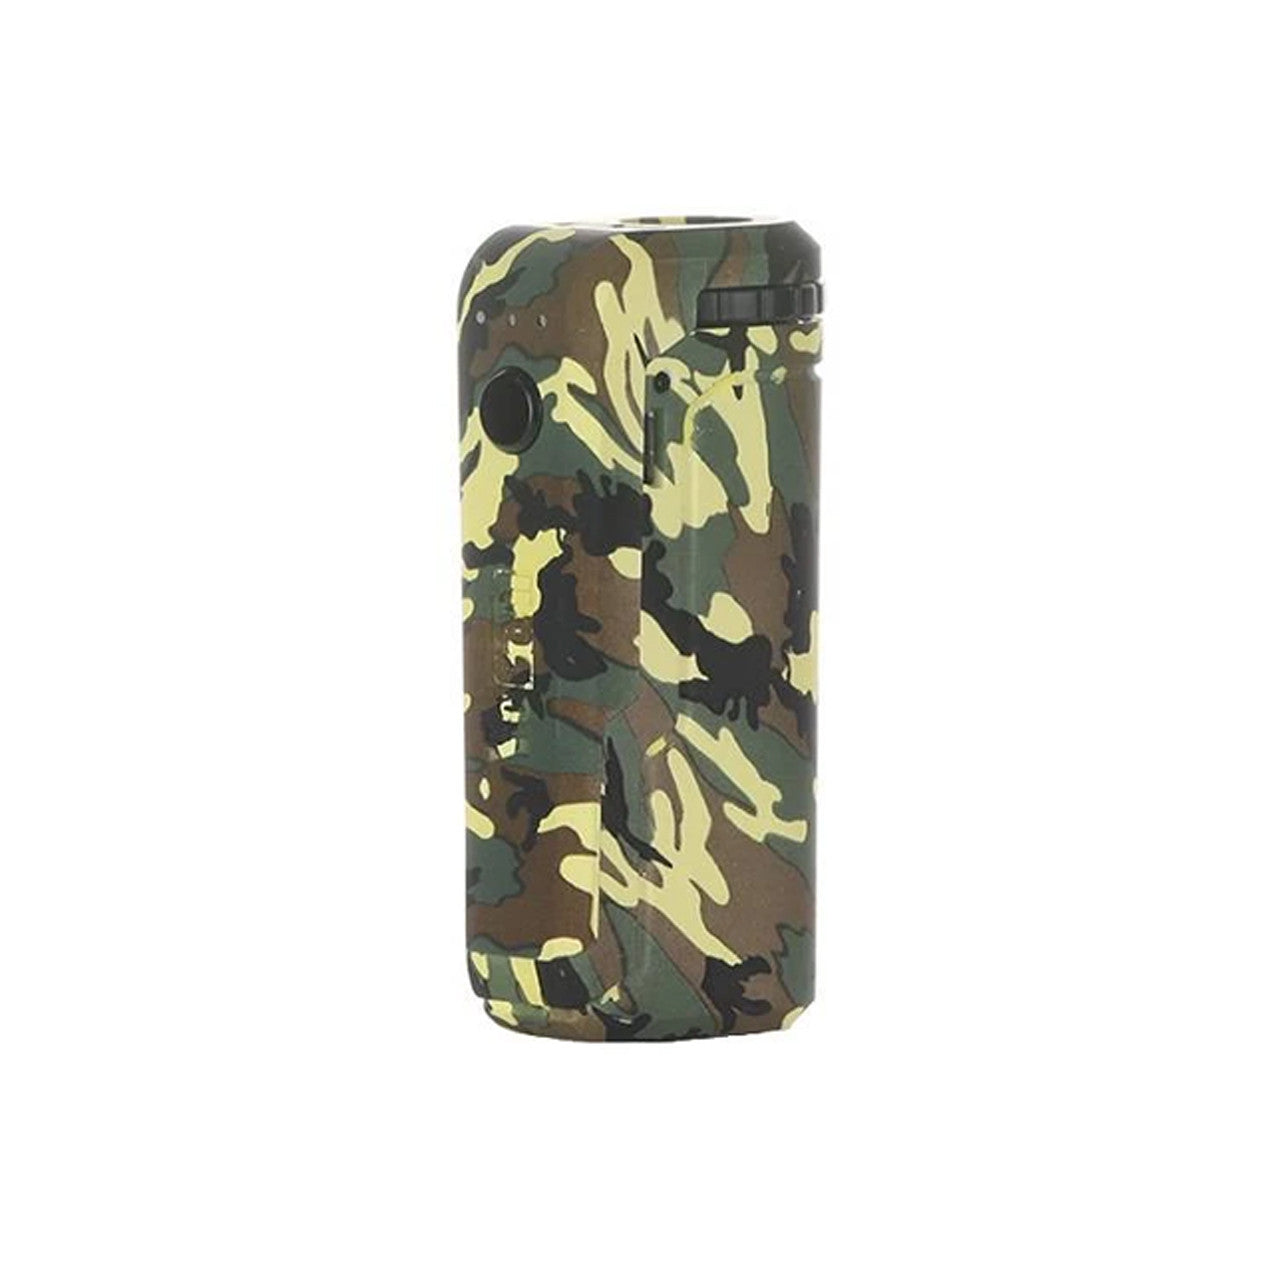 Yocan UNI 650mAh Universal Carto Battery Mod - Special Edition Camouflage